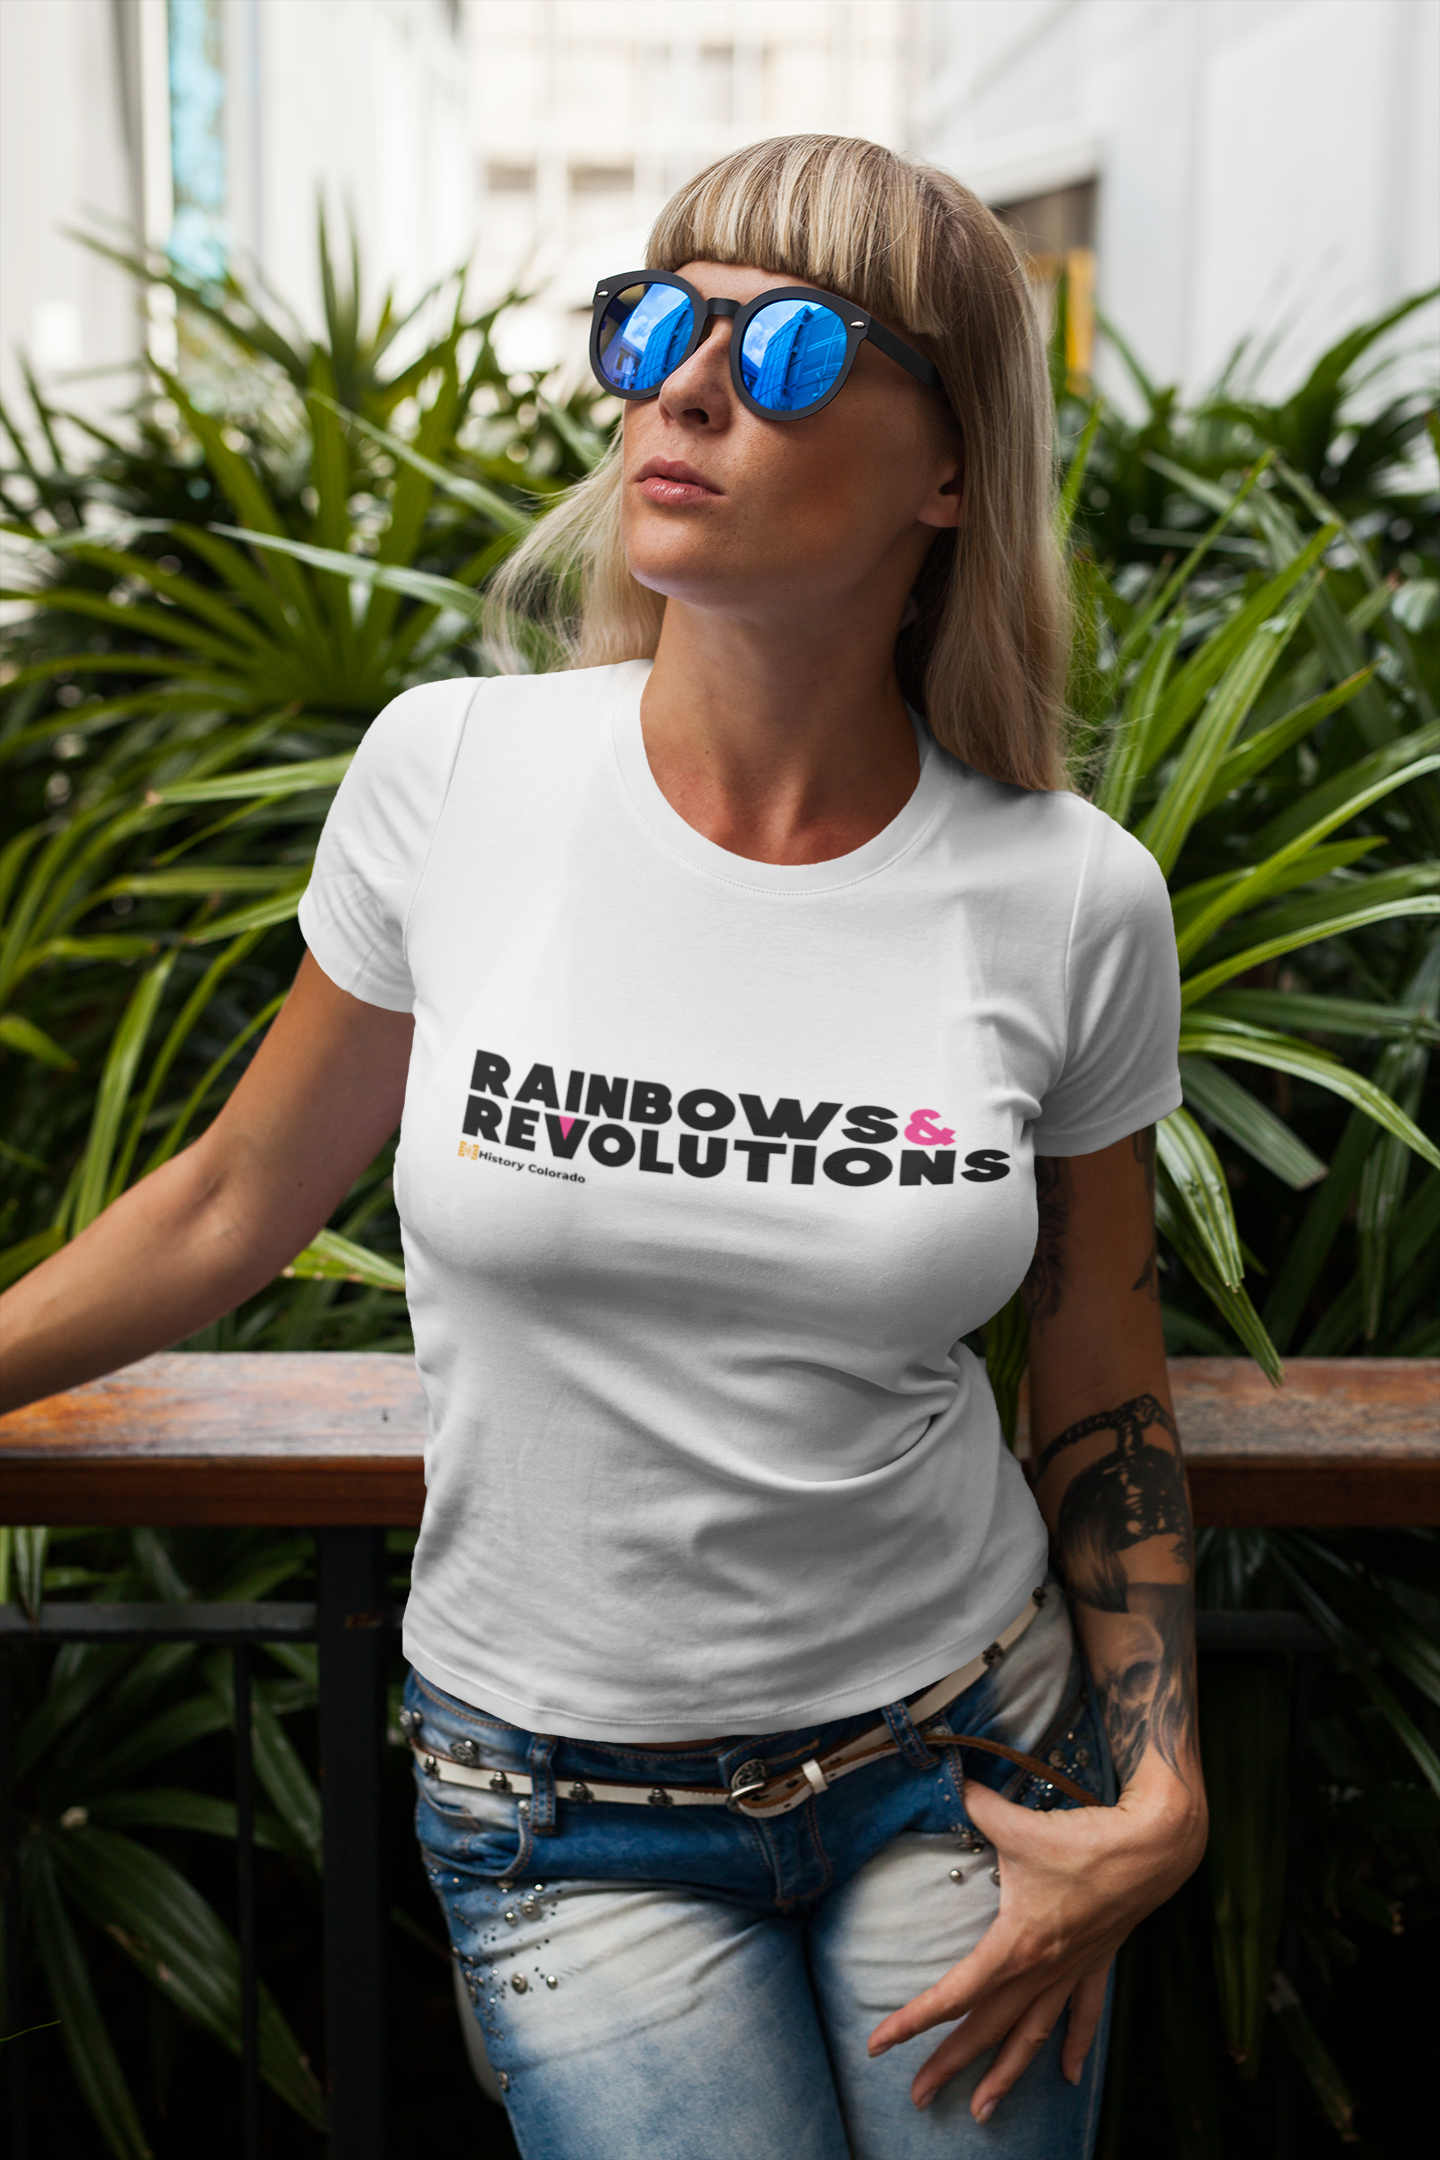 Rainbows & Revolutions - Unisex Shirt